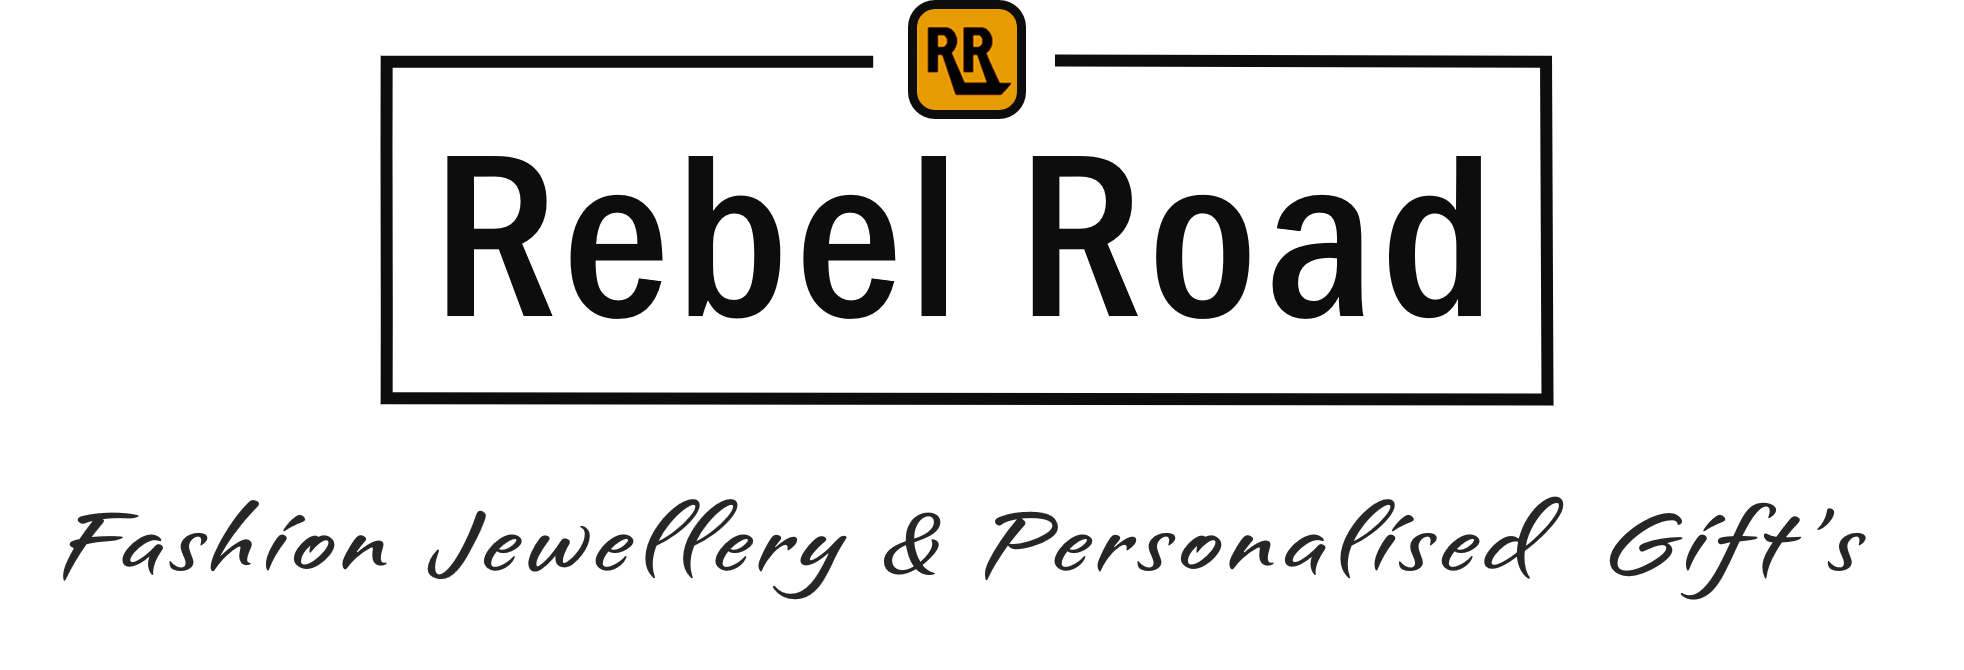 Rebelroad.co.za